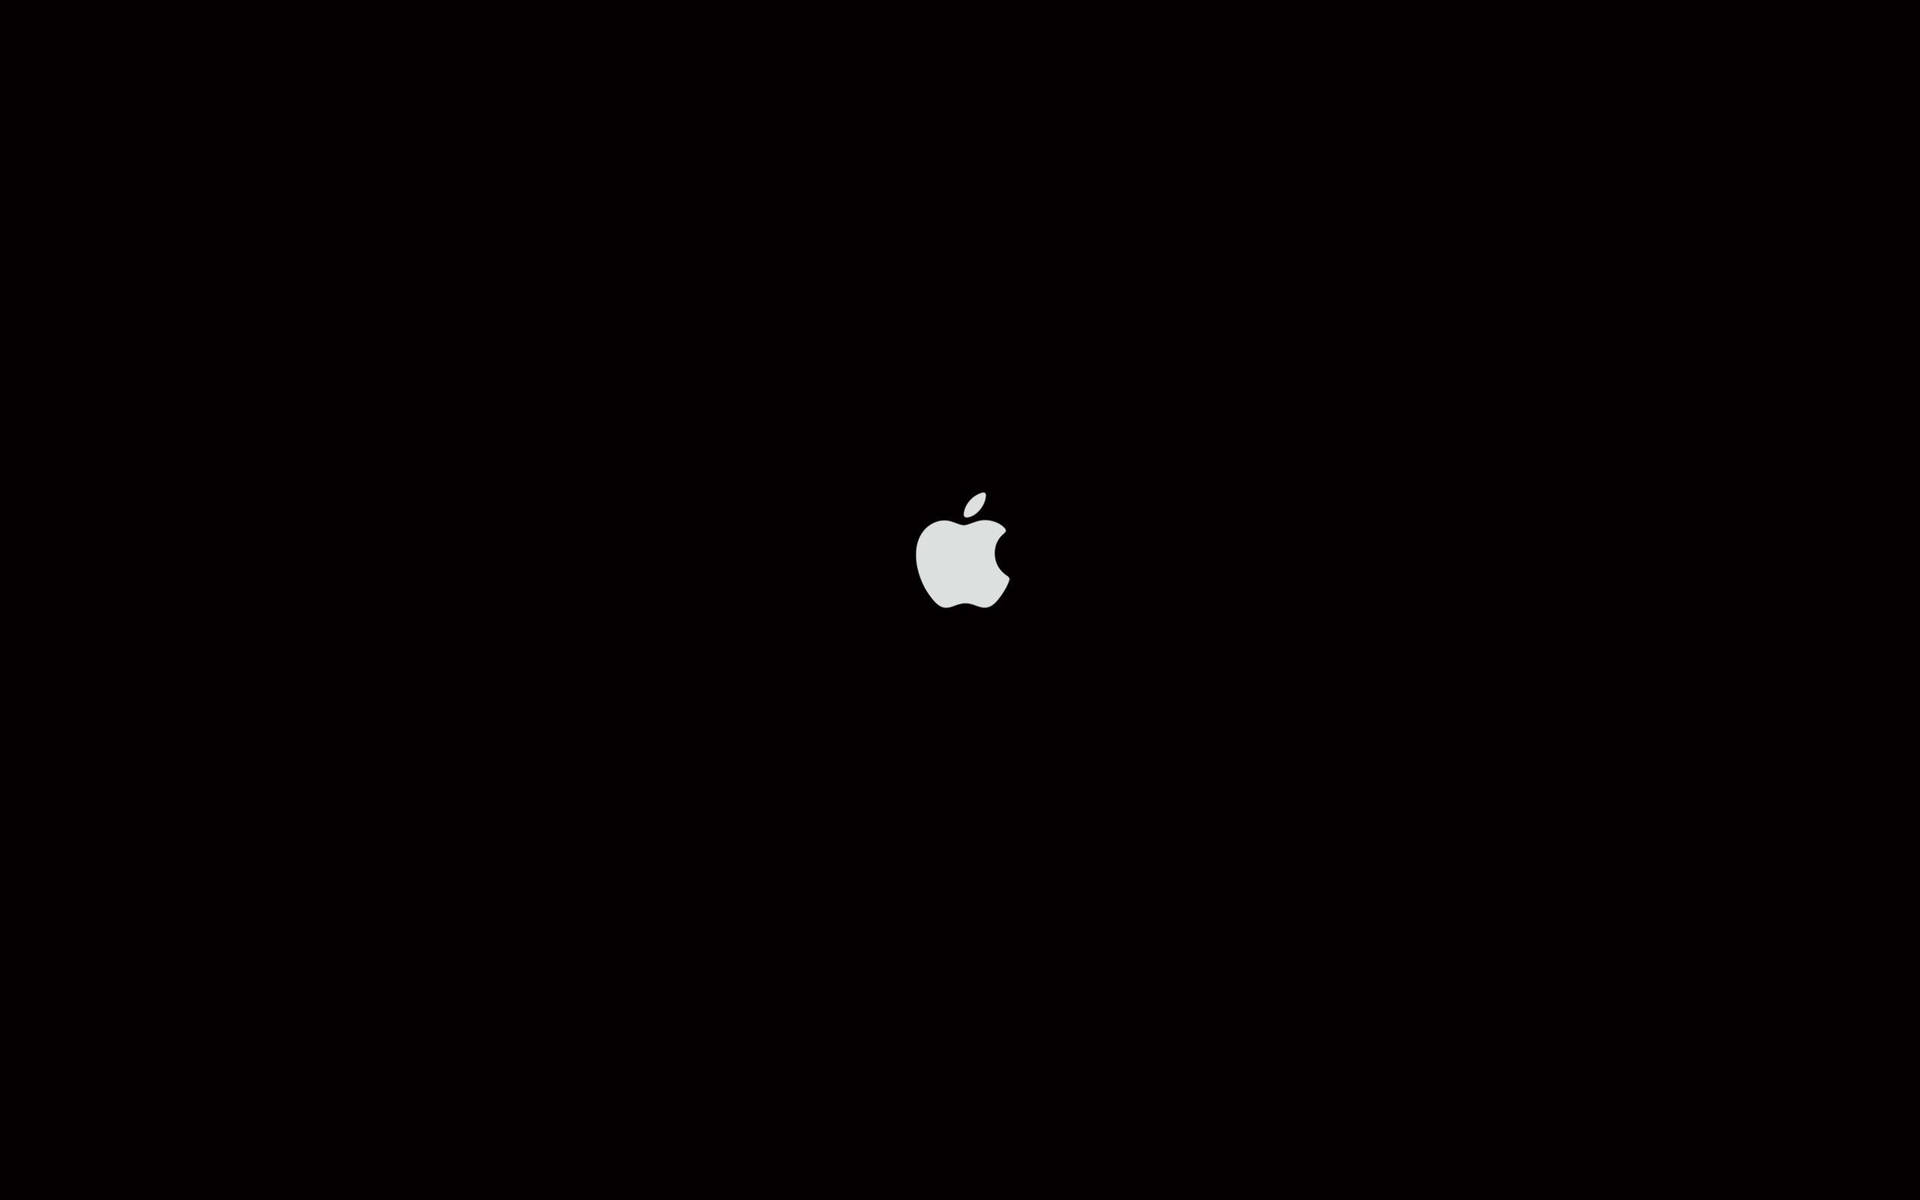 Plain Black And White Apple Logo Background